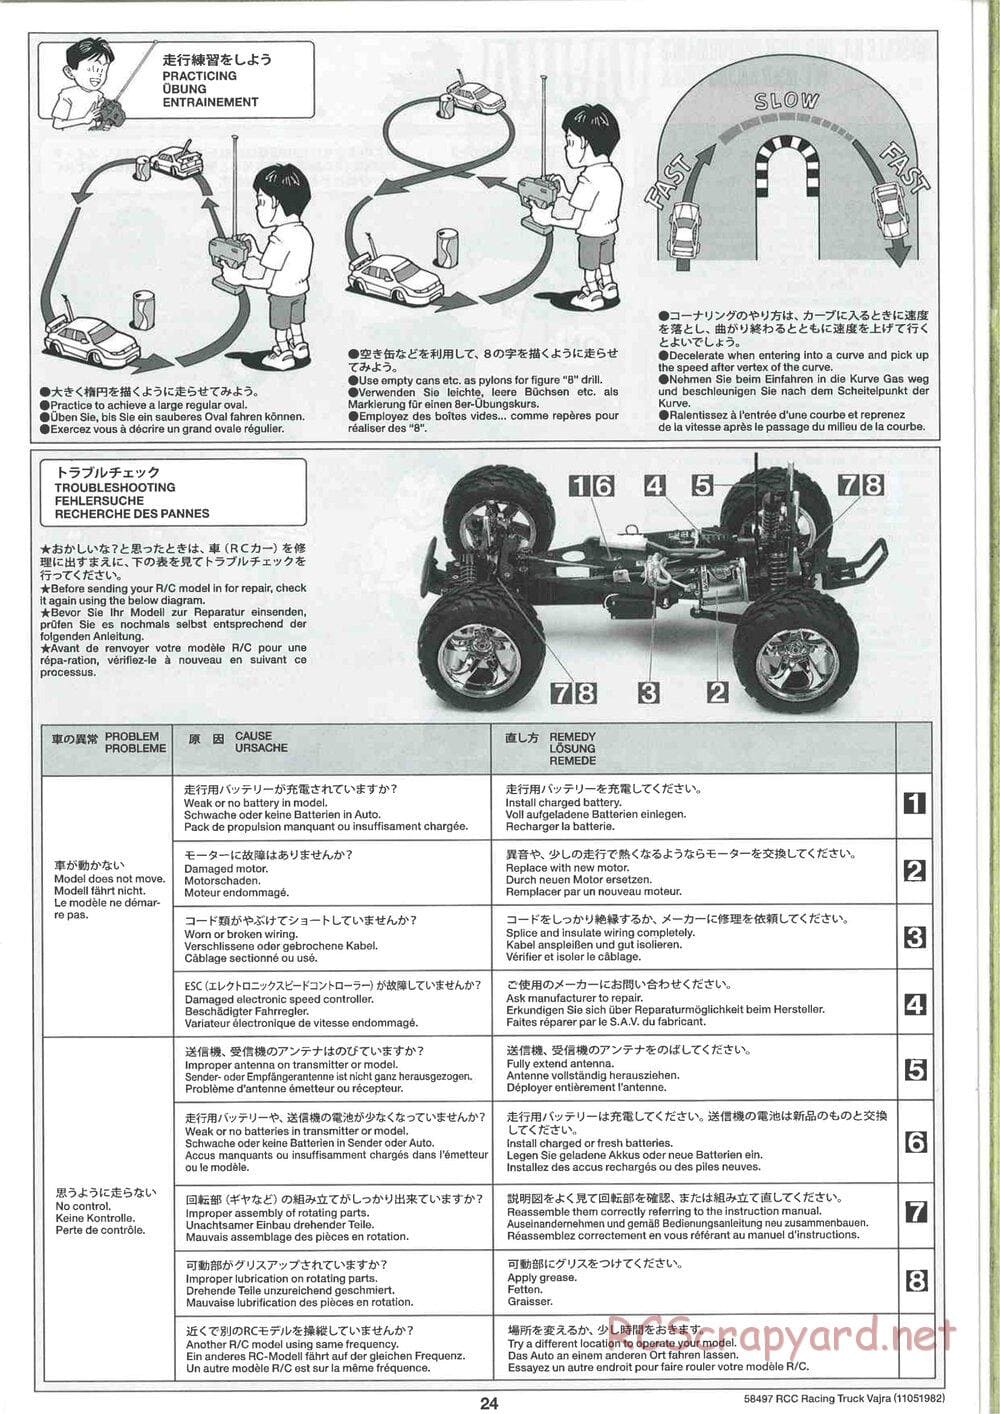 Tamiya - Vajra - AV Chassis - Manual - Page 24